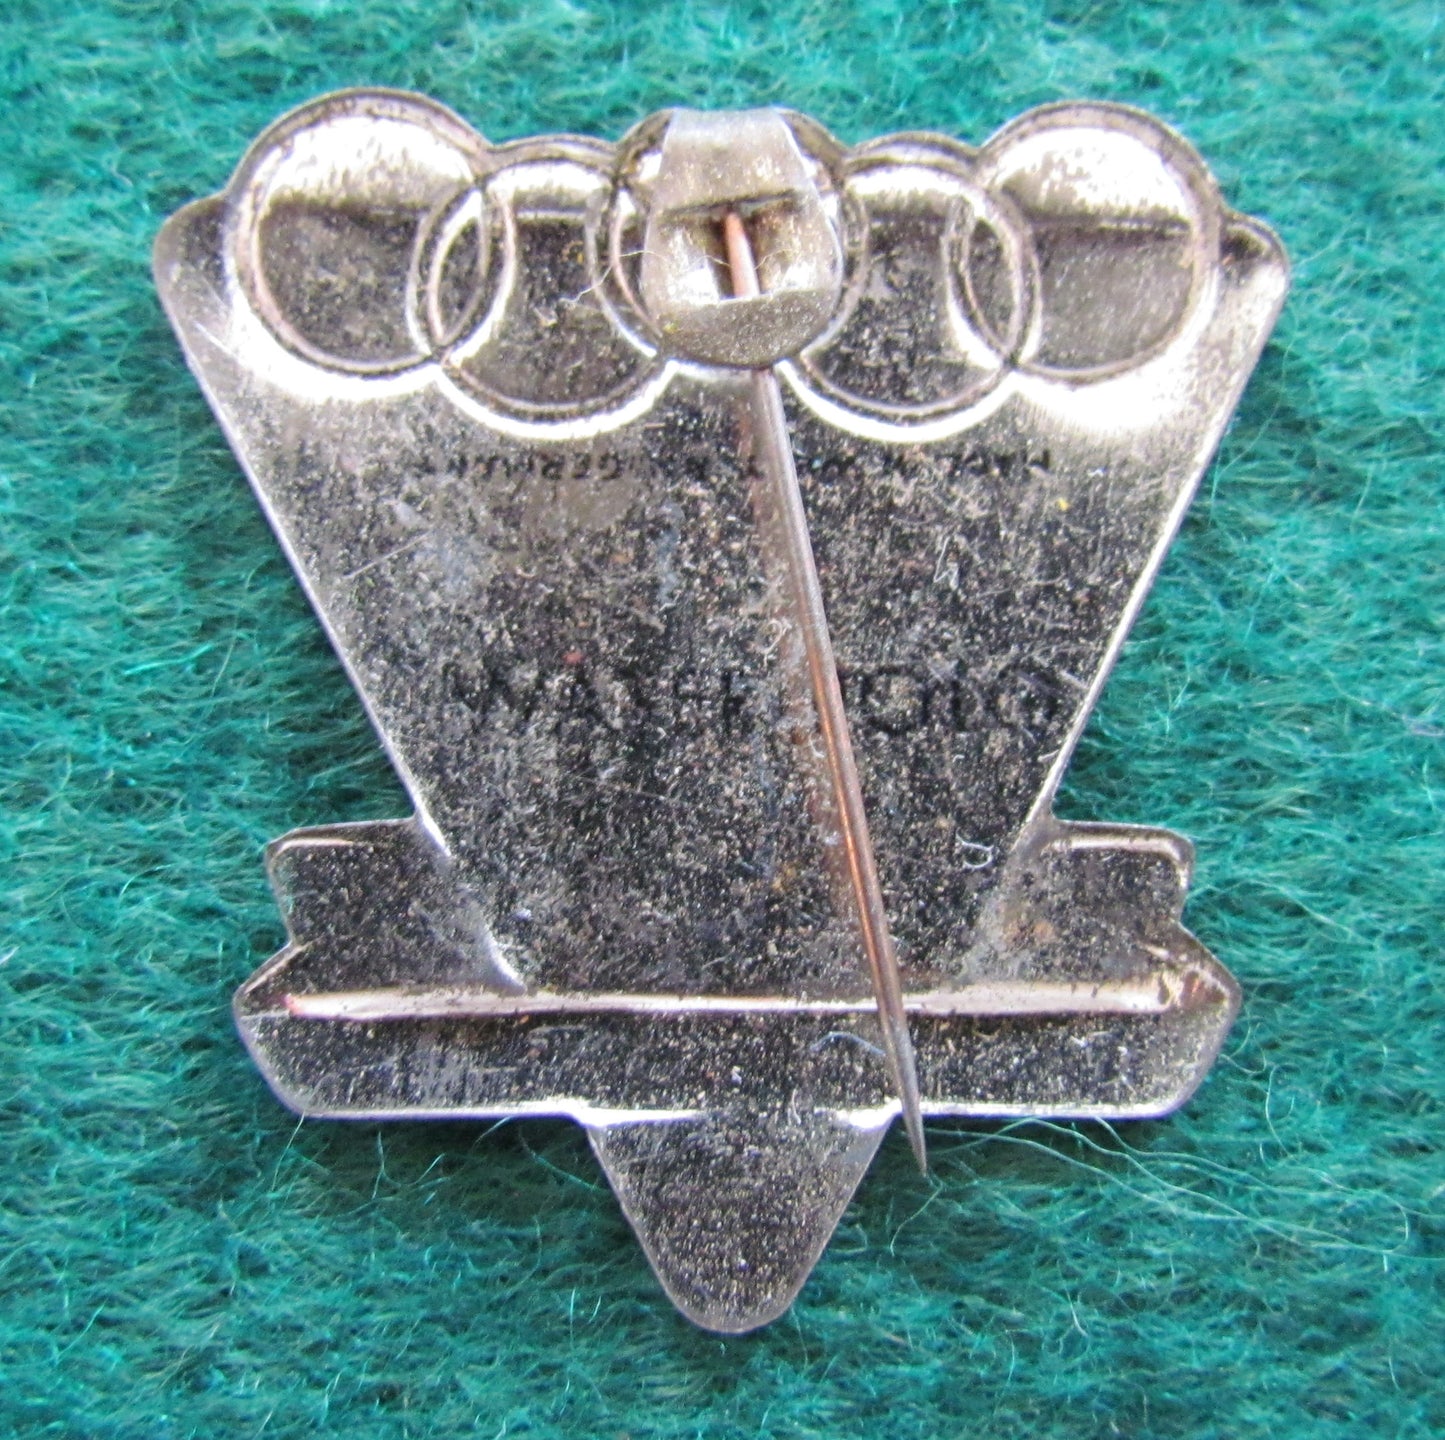 Australian Melbourne 1956 Olympic Water Polo Tin Badge